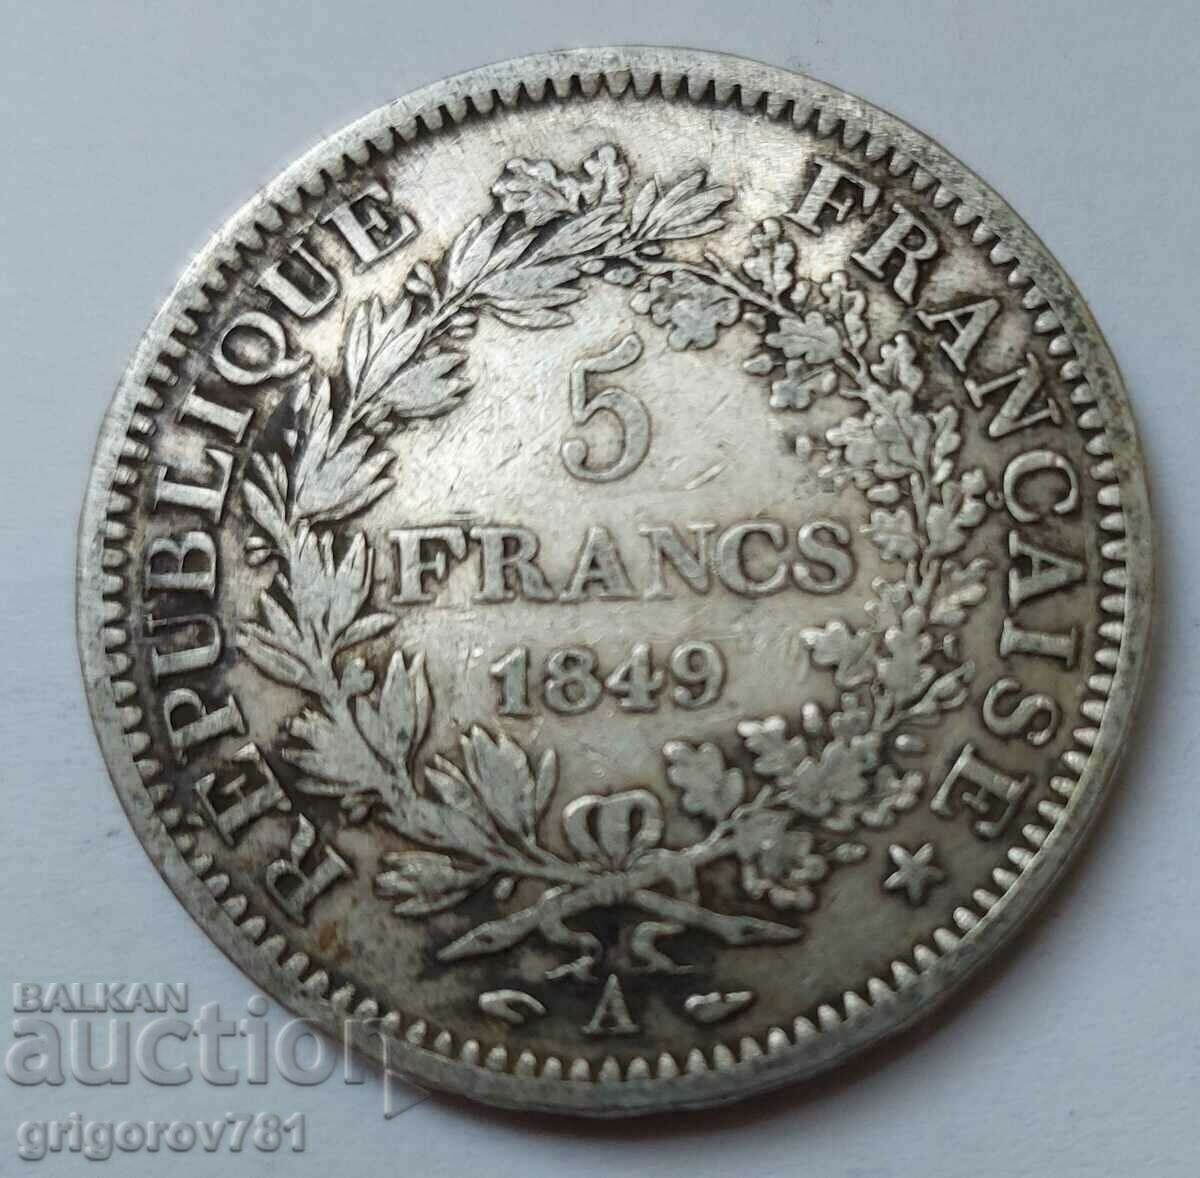 5 francs silver France 1849 A - silver coin # 50